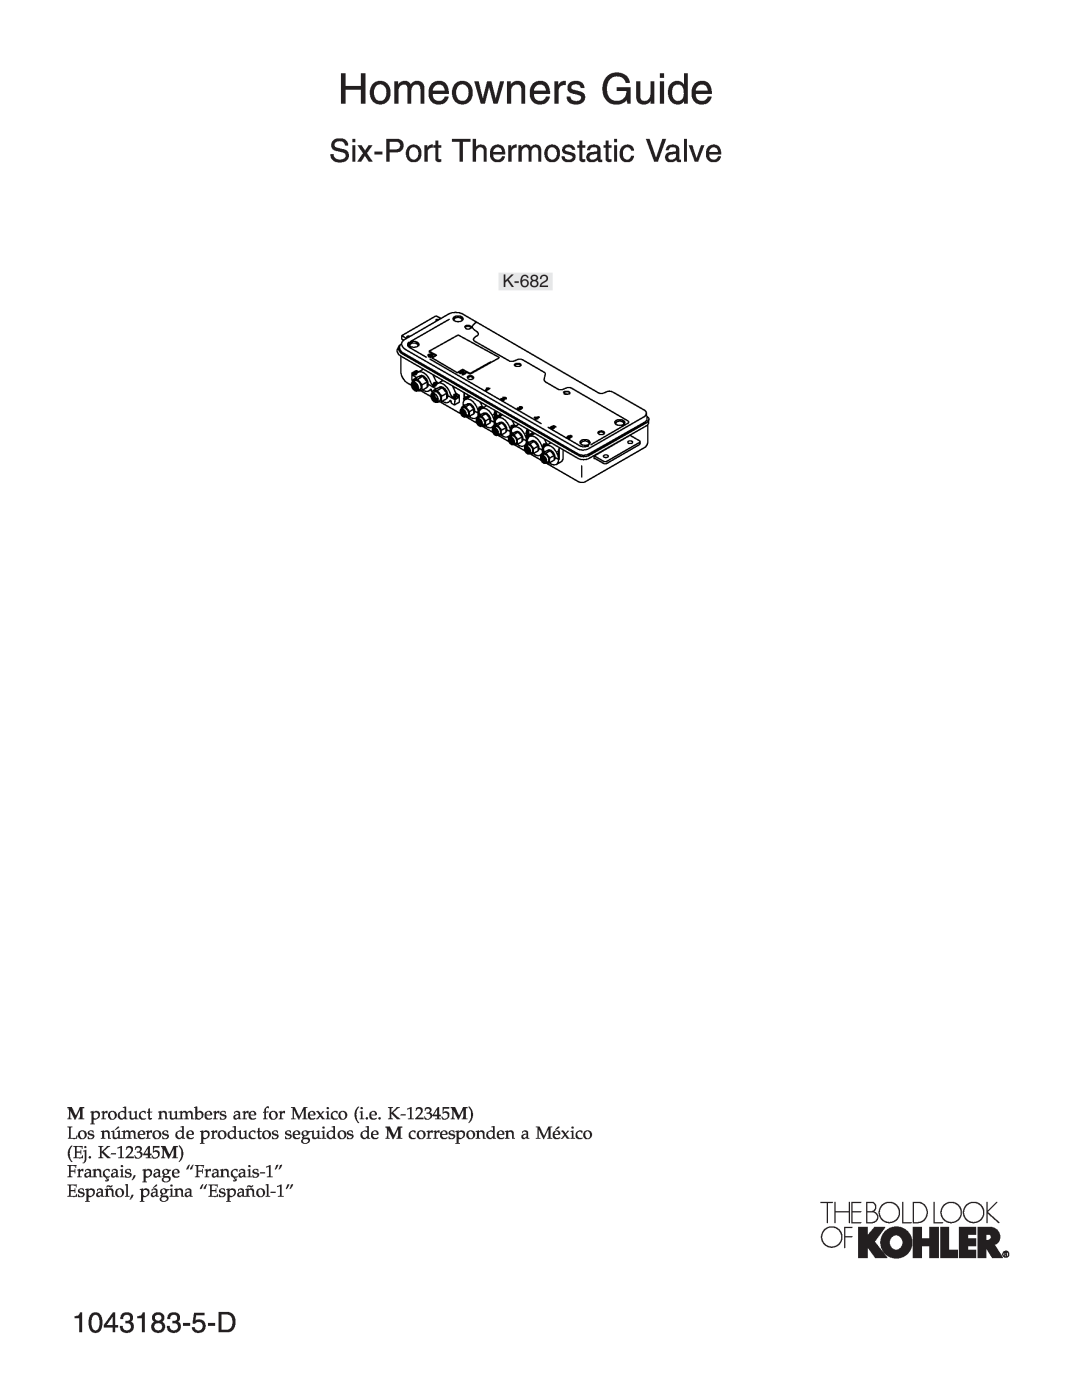 Kohler 1043183-5-D manual Homeowners Guide, Six-PortThermostatic Valve, K-682 